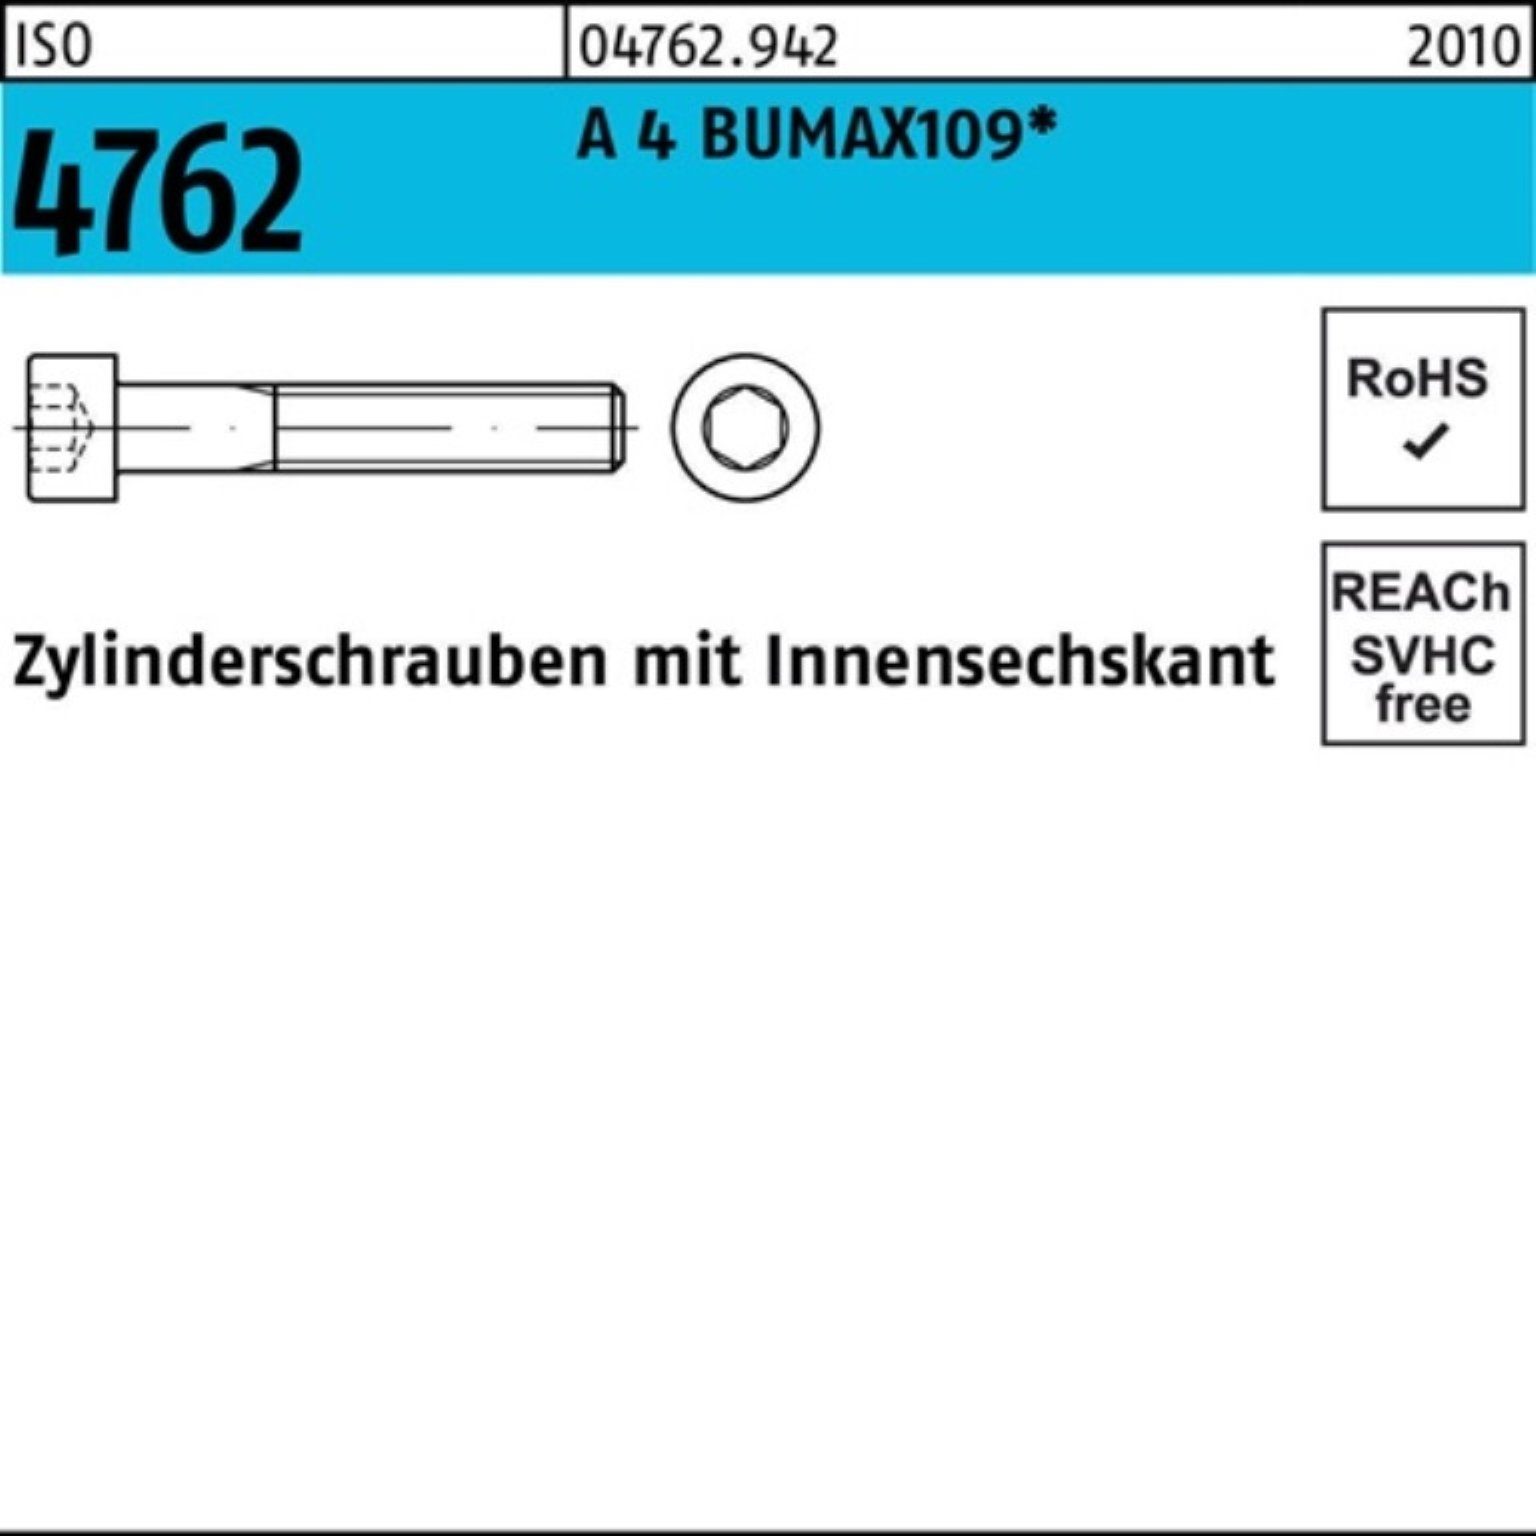 A Pack 100er Zylinderschraube 4762 4 BUMAX109 40 100 ISO Bufab Zylinderschraube Innen-6kt M6x